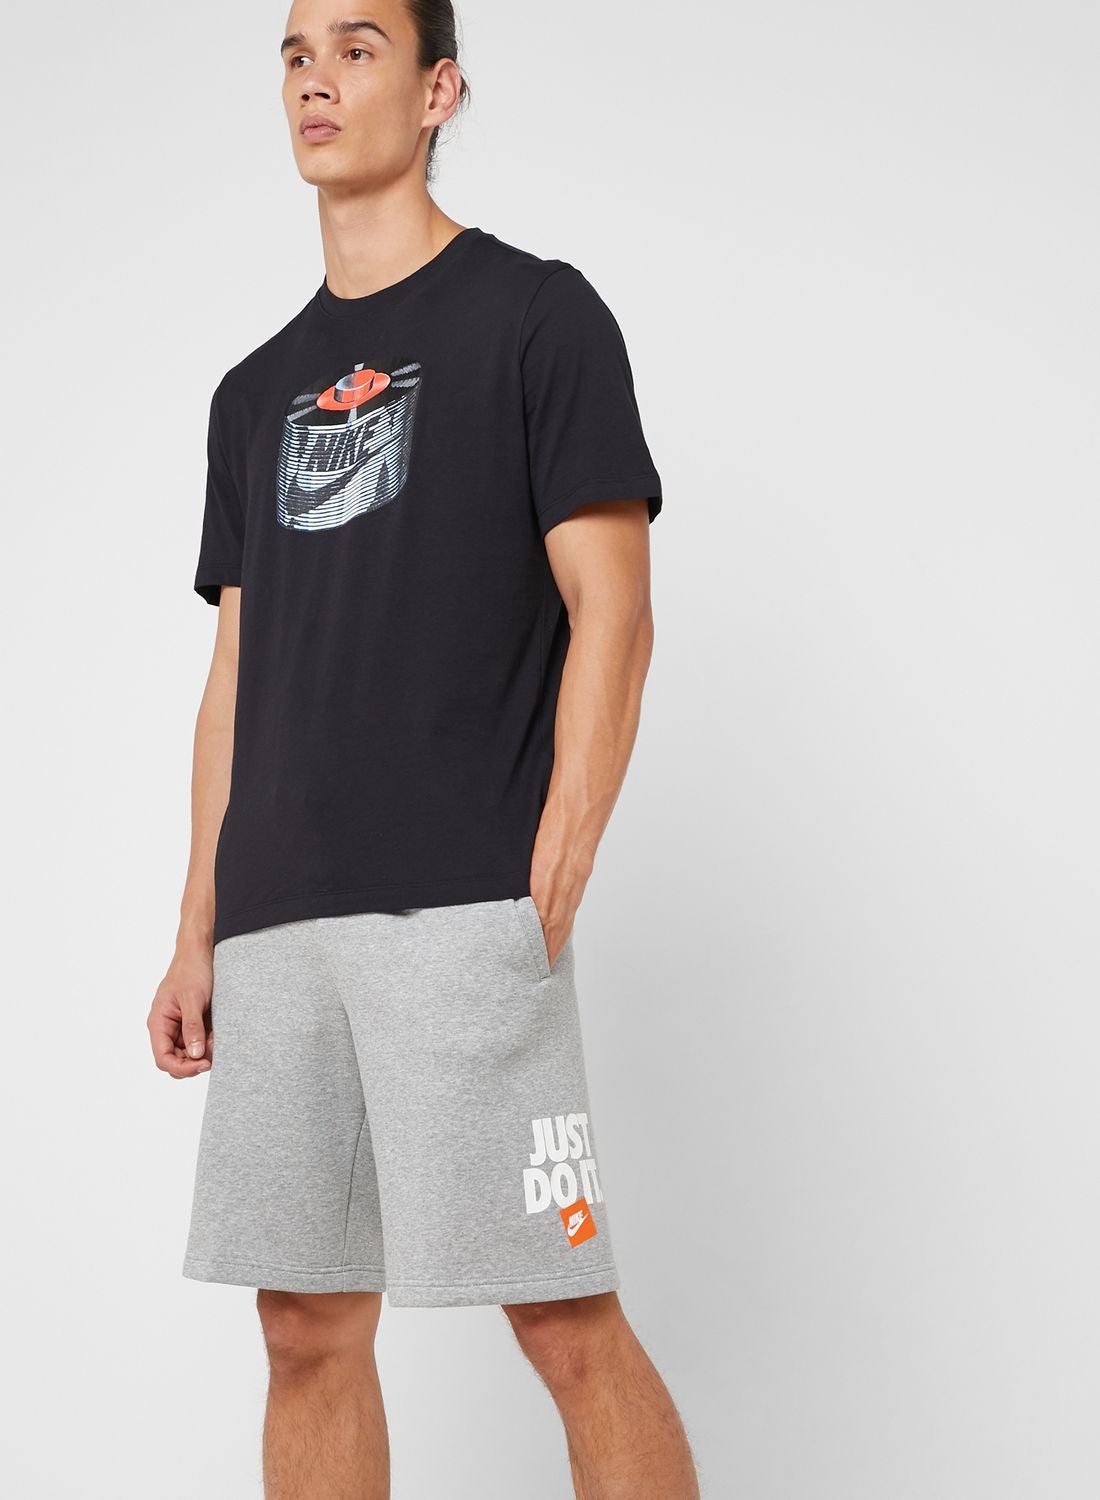 Nike Just Do It Fleece Short - Gray